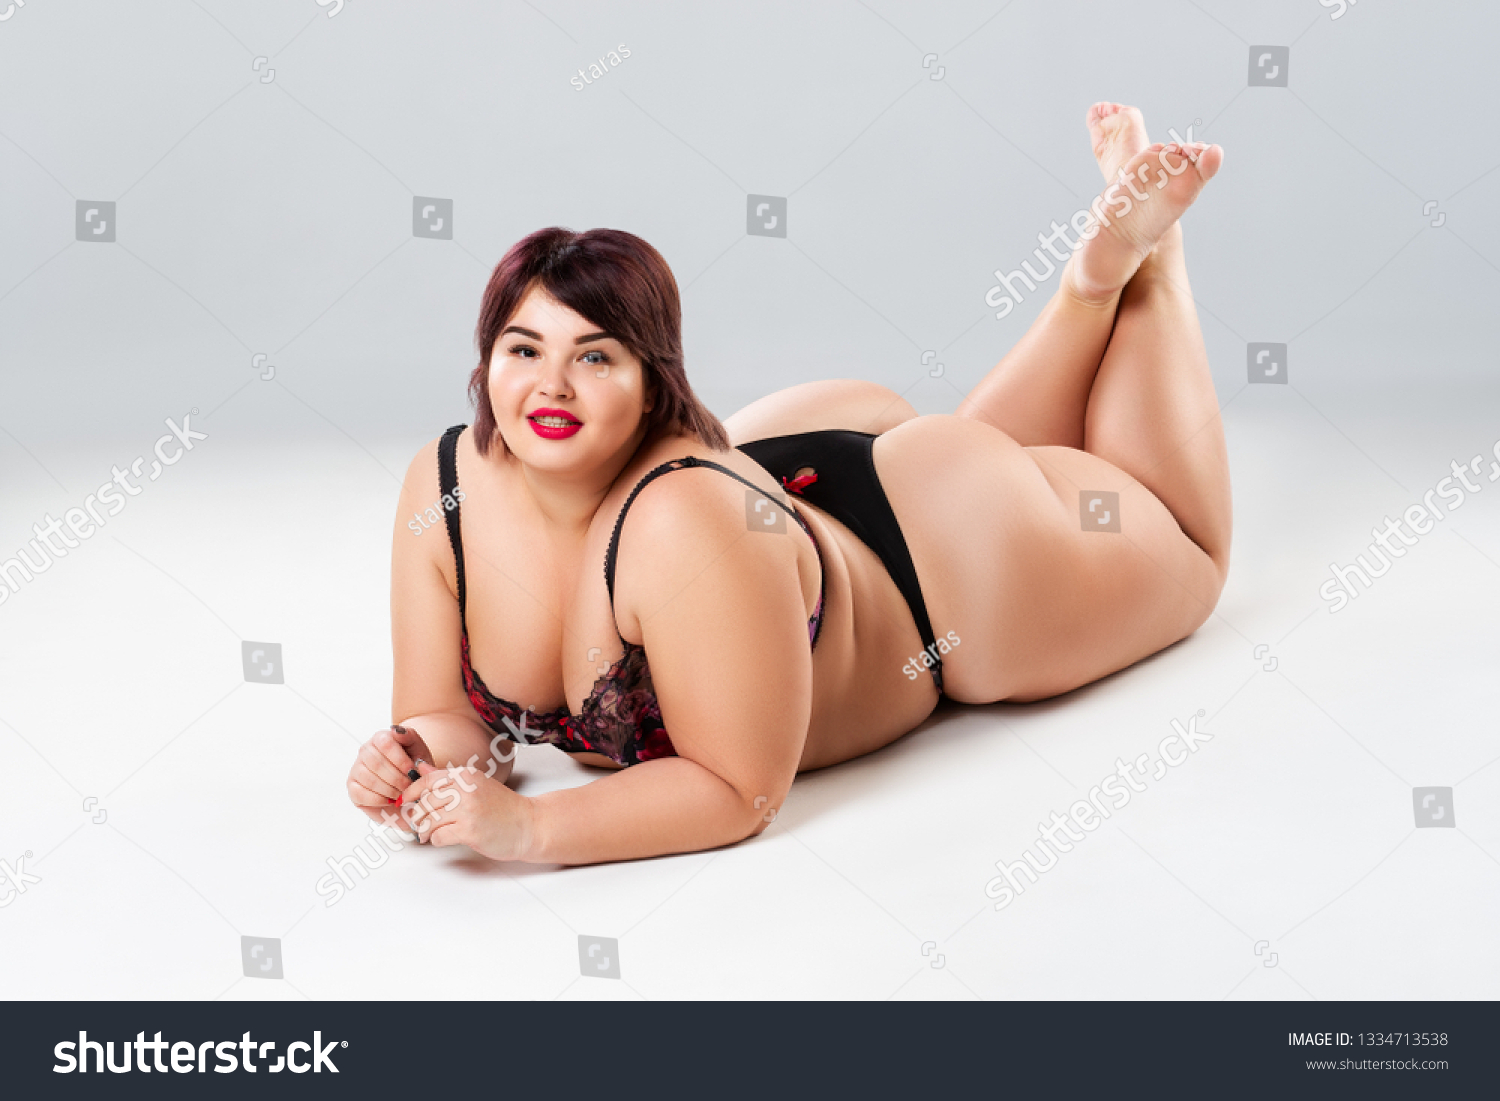 adam gilliss recommends Pics Of Fat Sexy Women